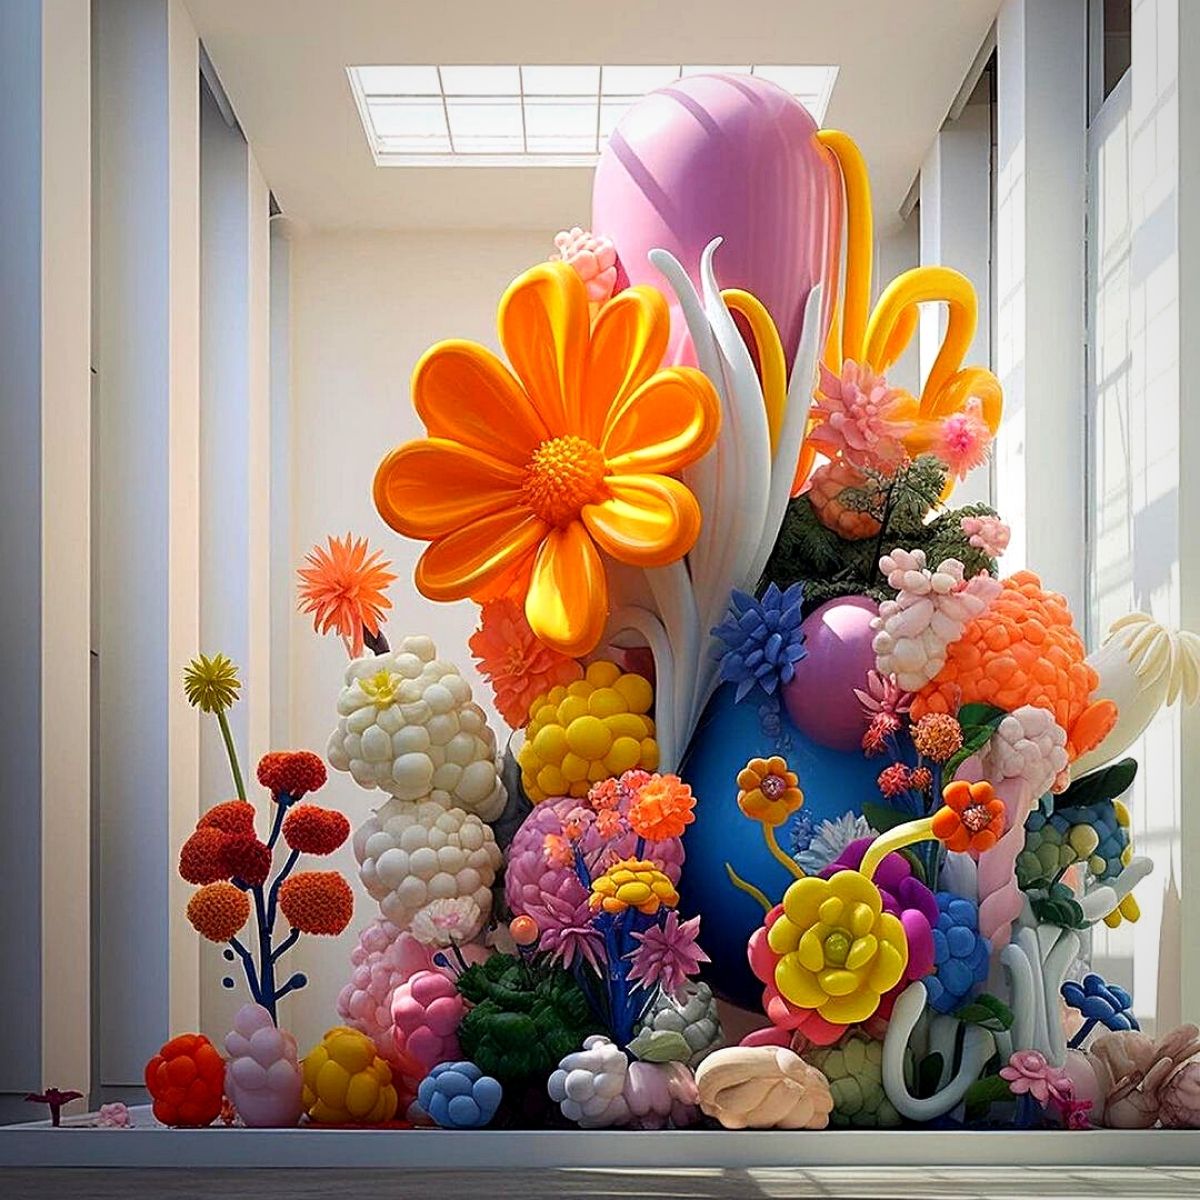 Ken Kelleher's artistic floral art creations